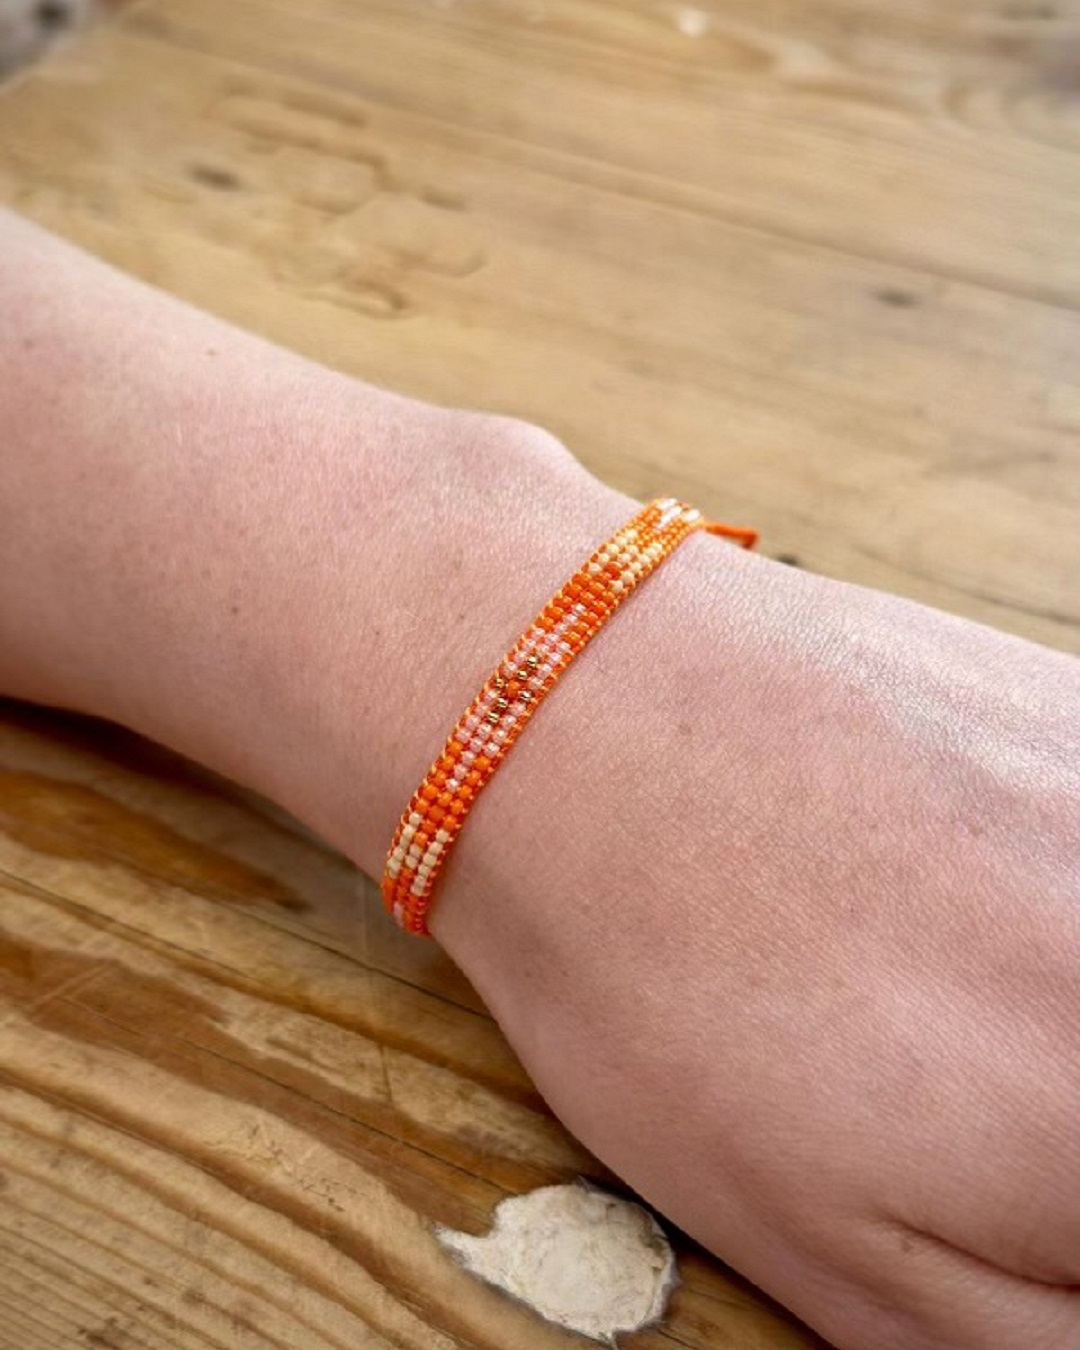 knitted pink and orange bracelet on wrist